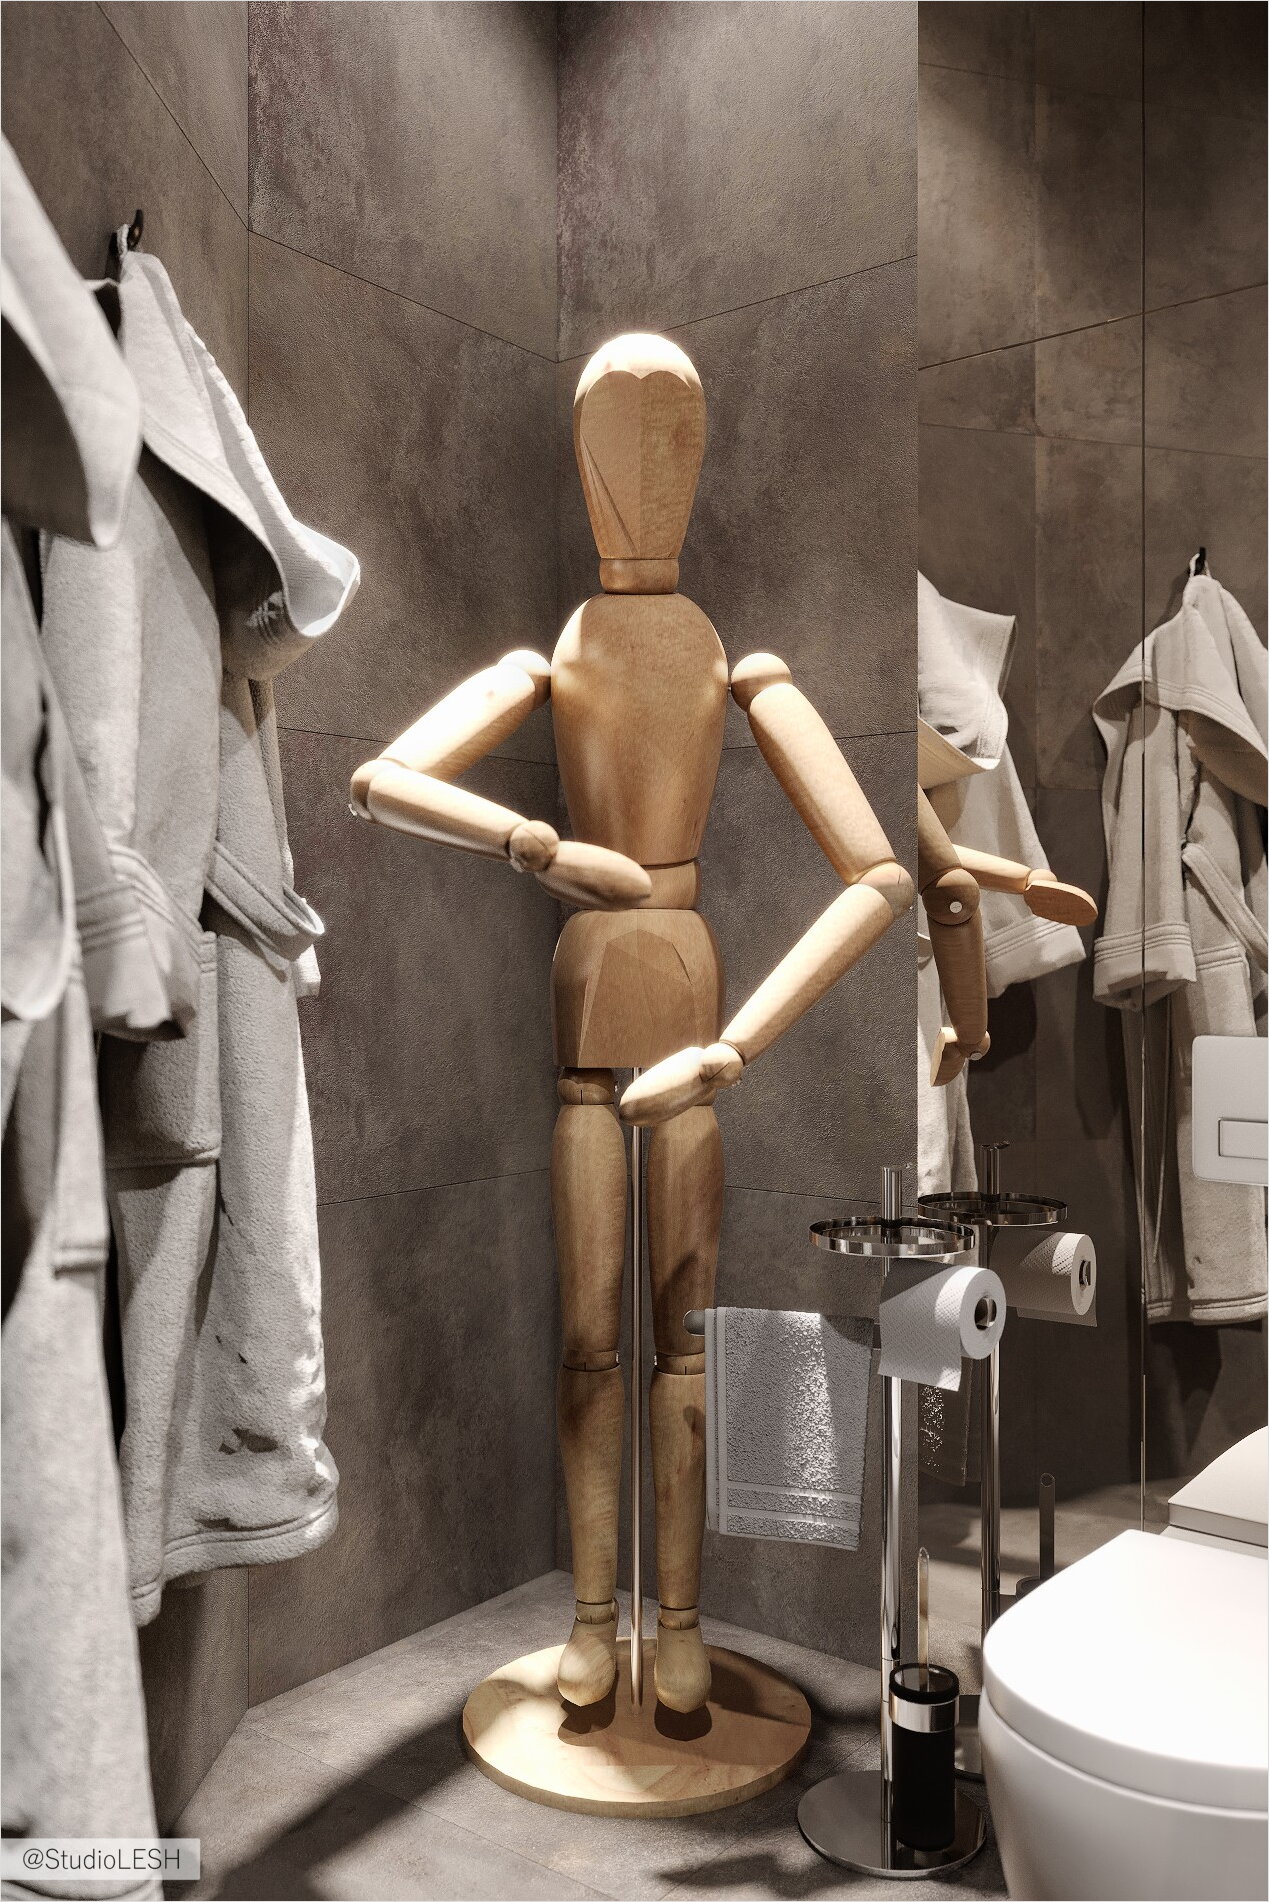 Full-length sculpture of a wooden man from IKEA